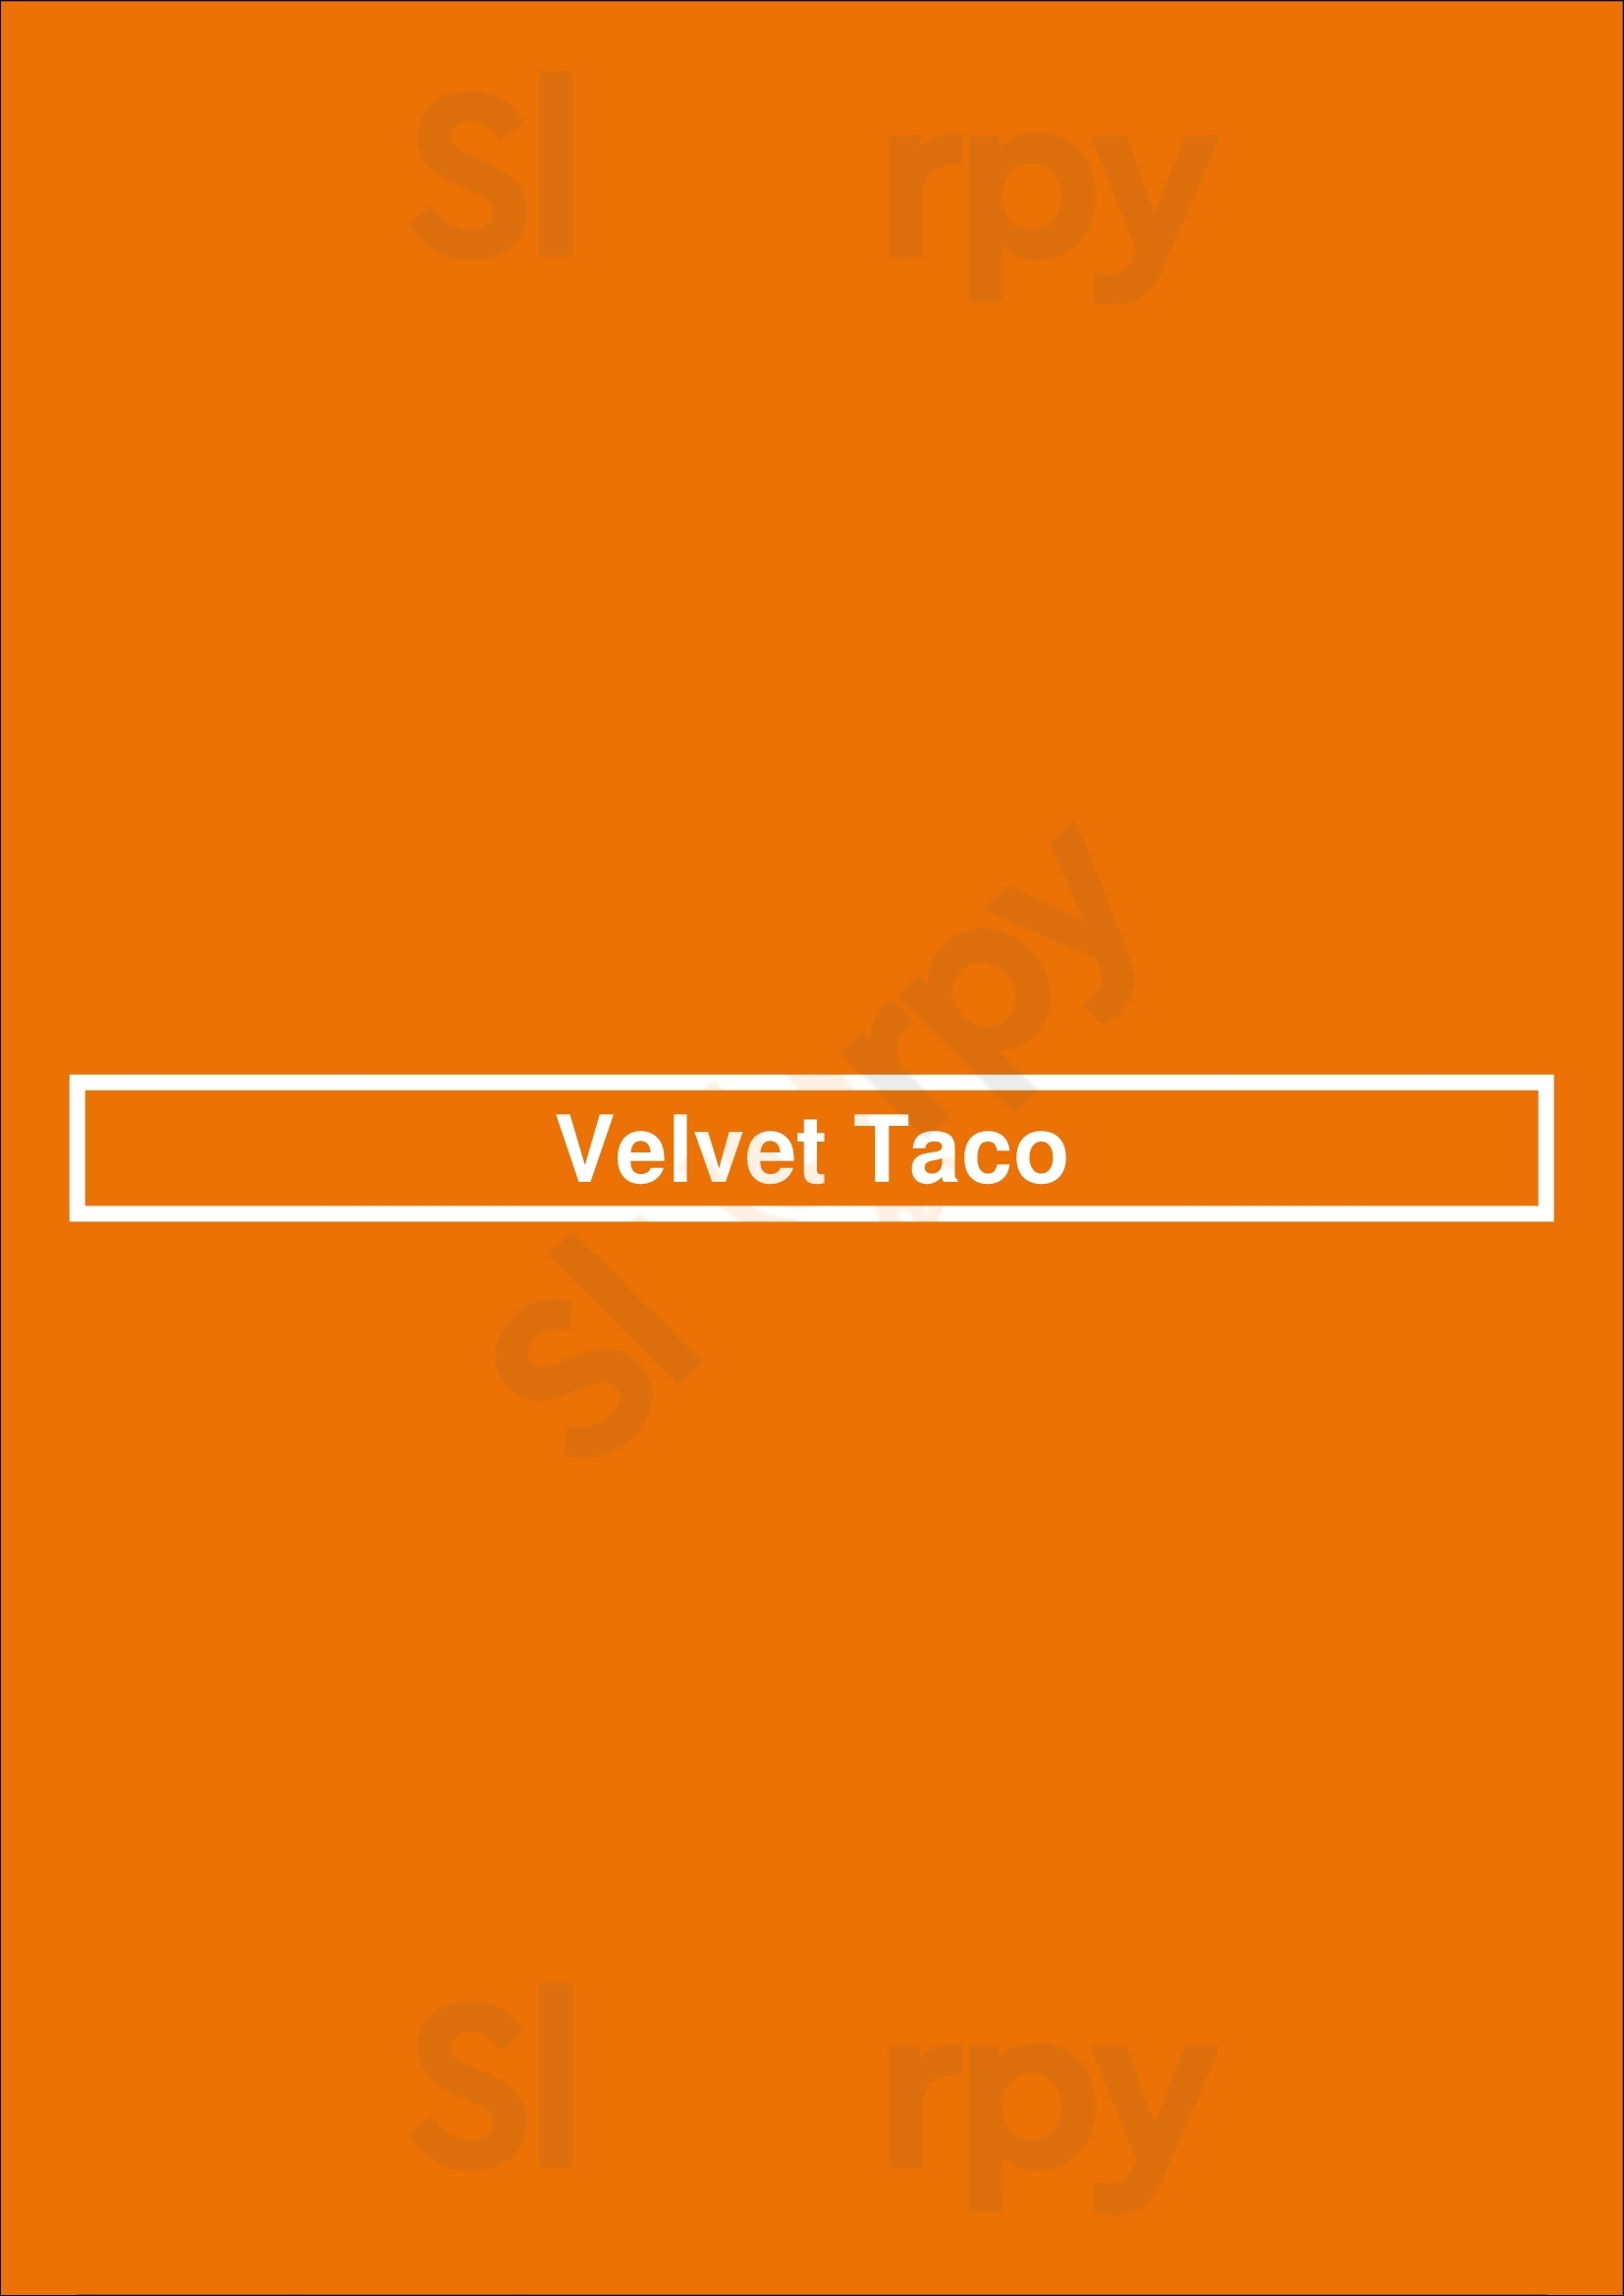 Velvet Taco Fort Worth Menu - 1